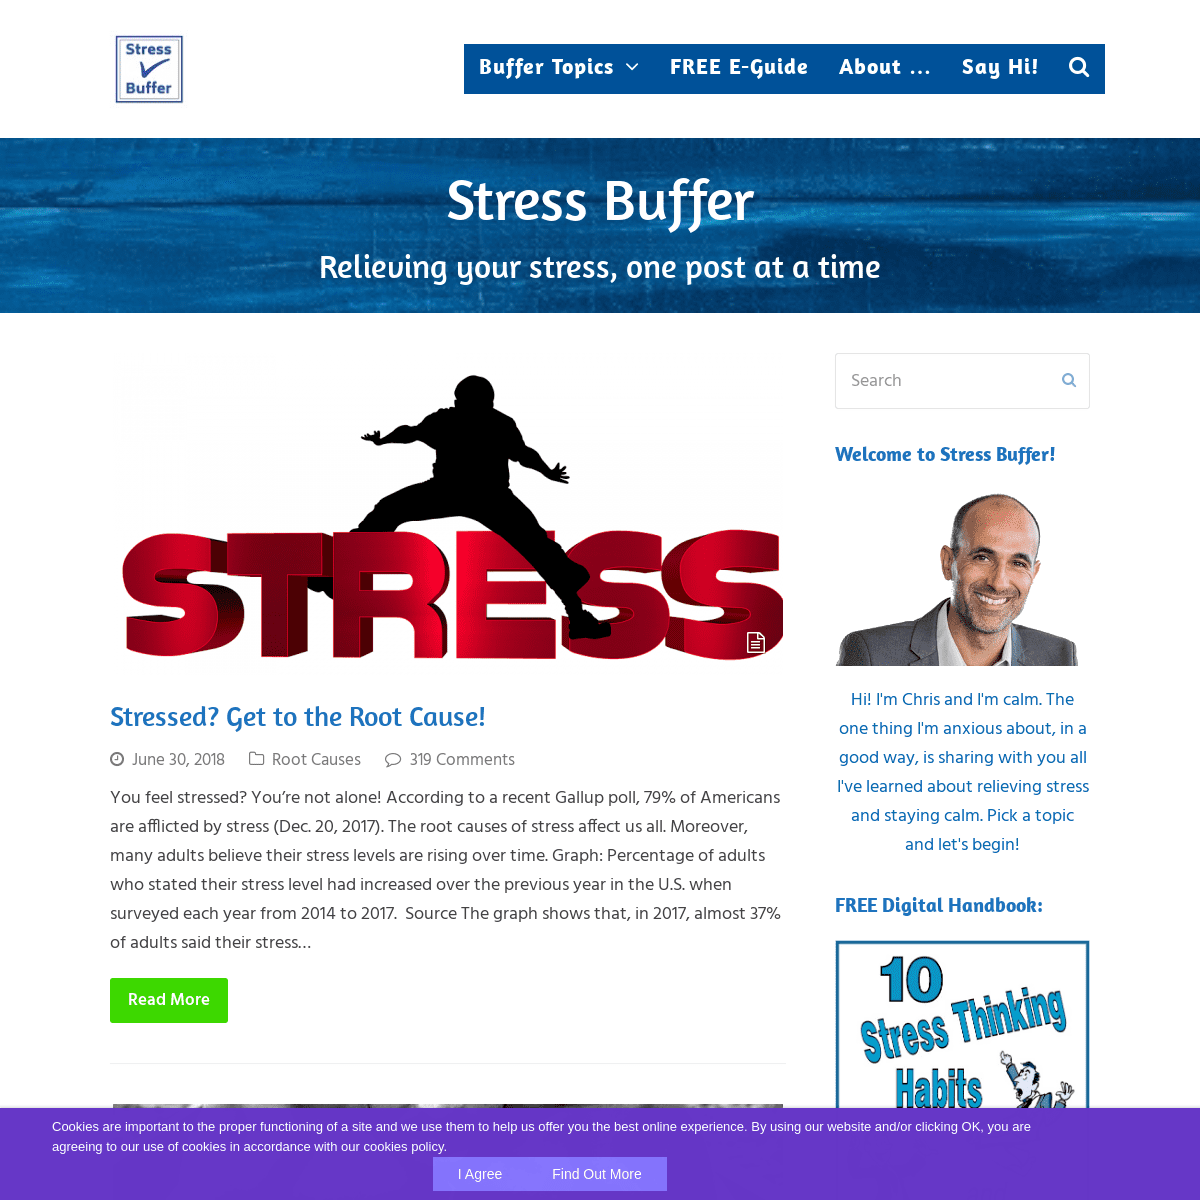 A complete backup of stressbuffer.com